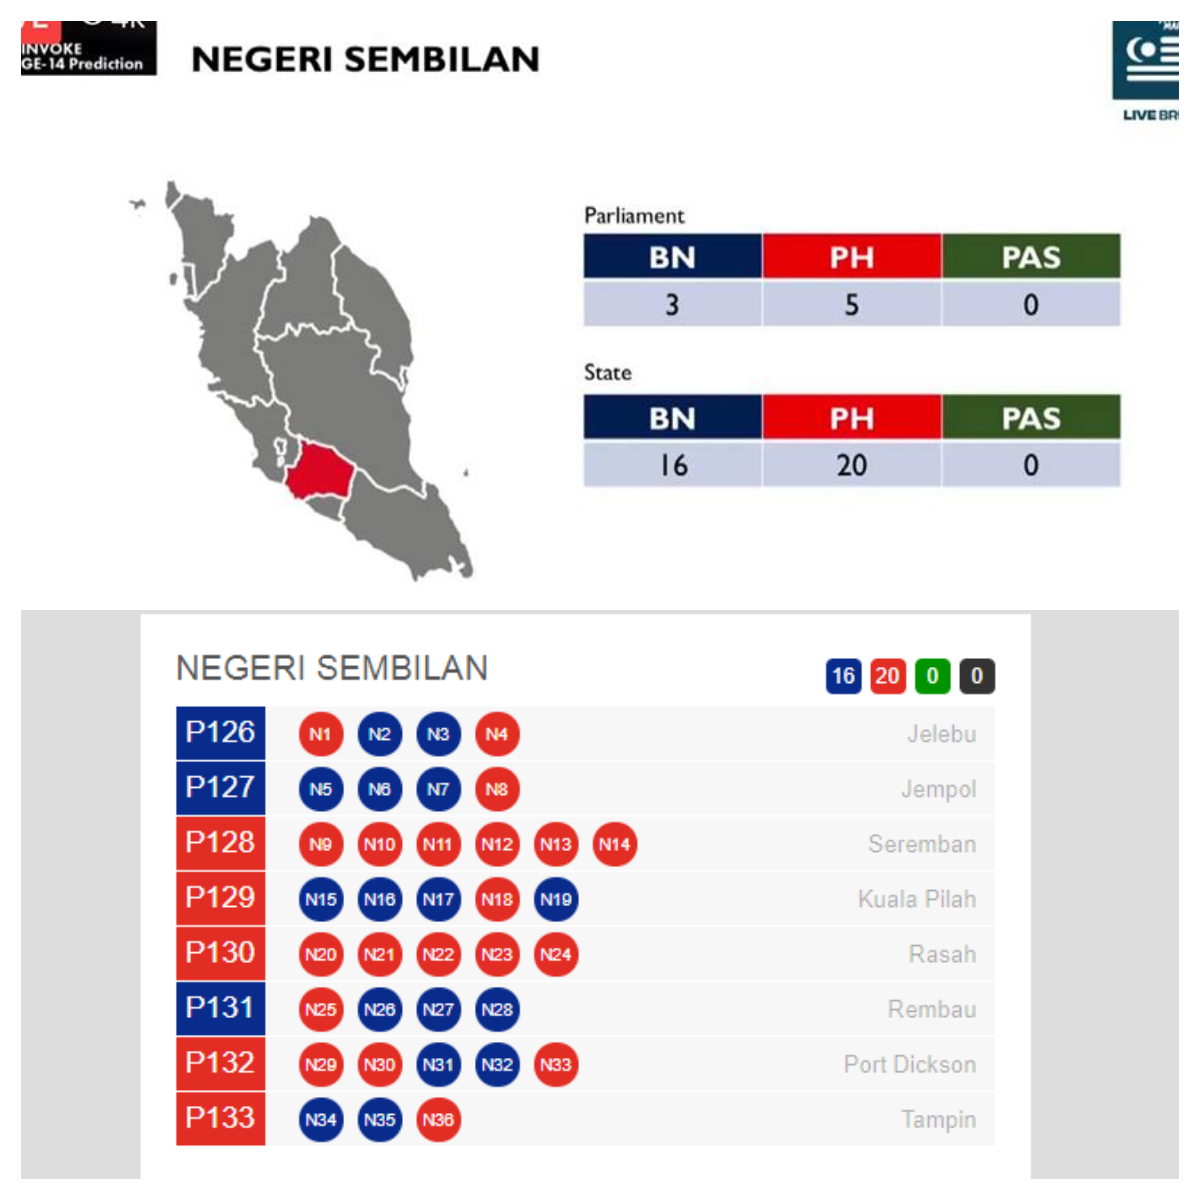 GE14 prediction (top) vs actual result (bottom) of Negeri Sembilan. Images from Invoke and undi.info